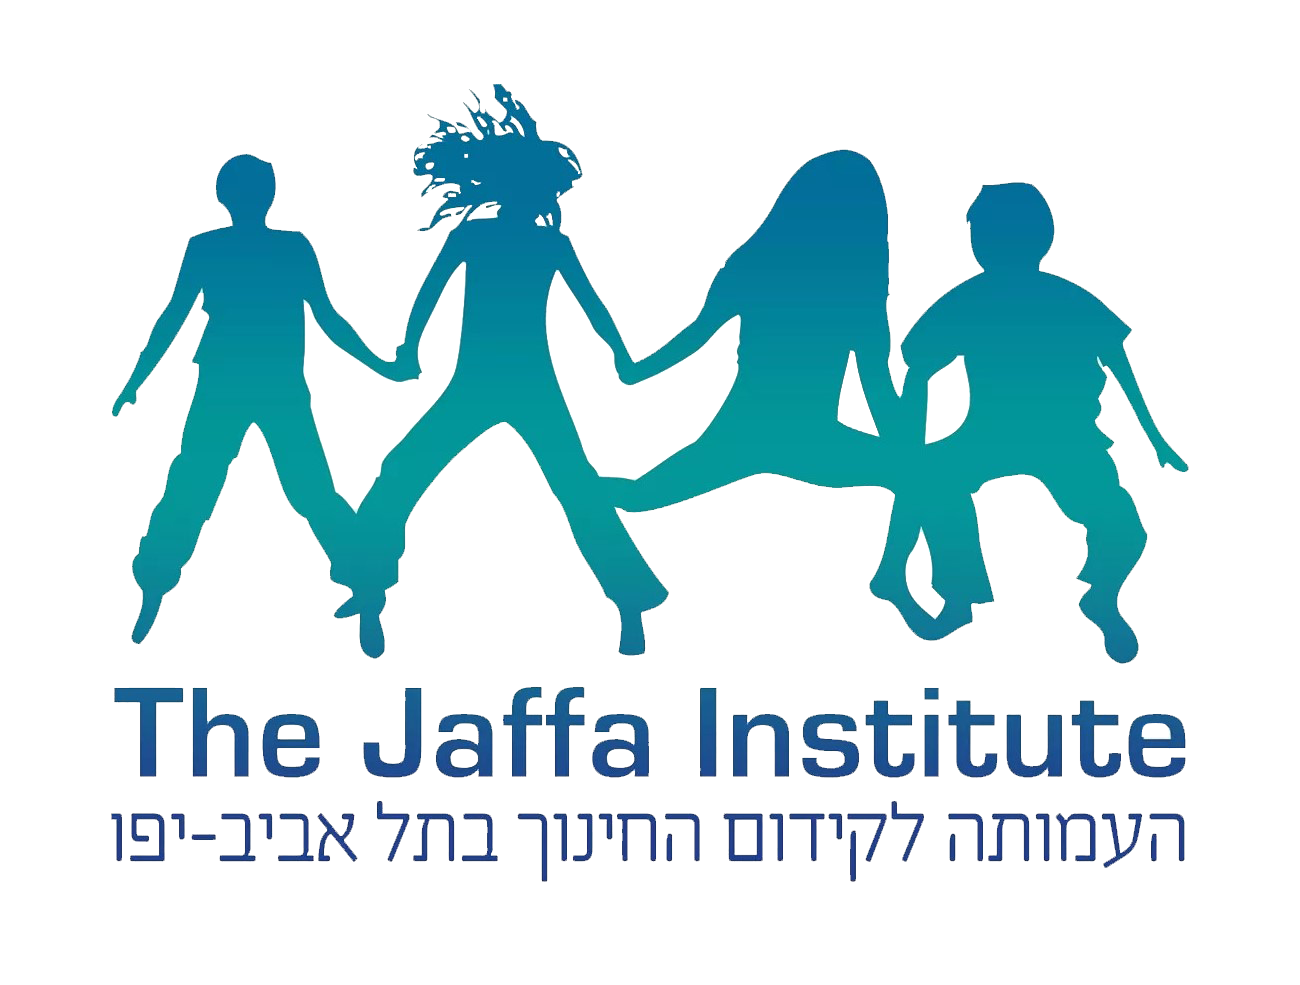 The Jaffa Institute logo, silhouette of 4 children holding hands